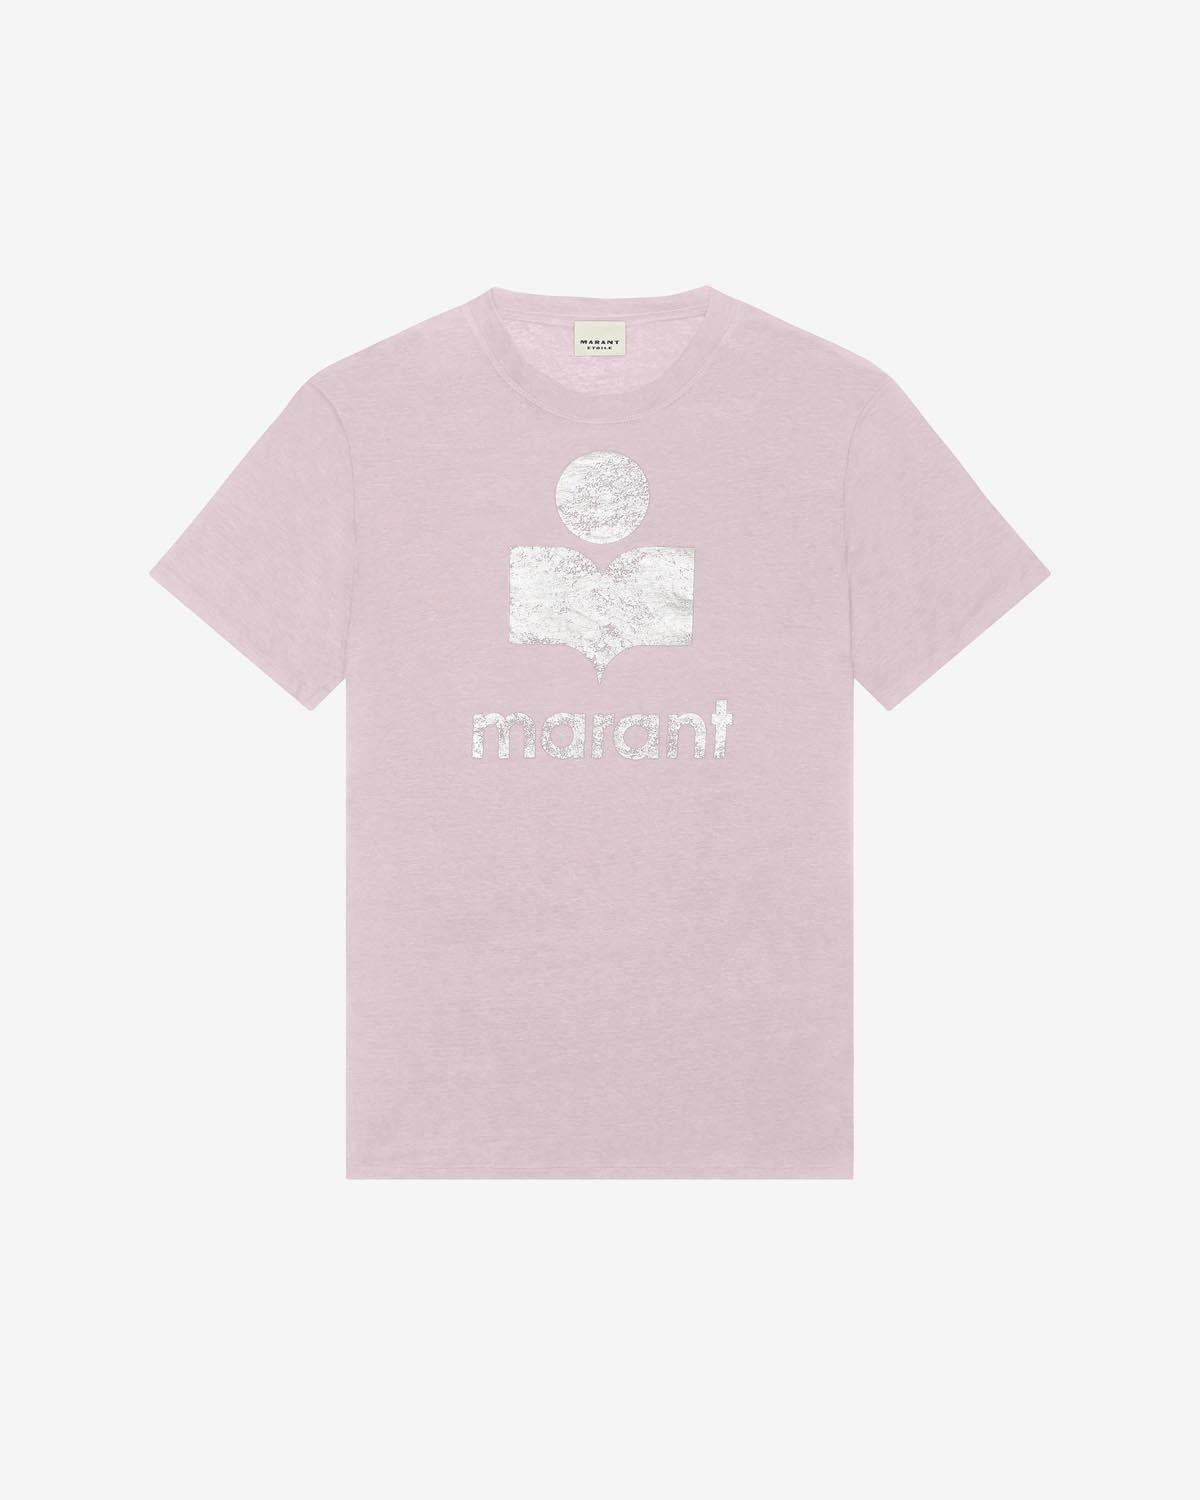 Zewel tee-shirt Woman Pearl rose-silver 7